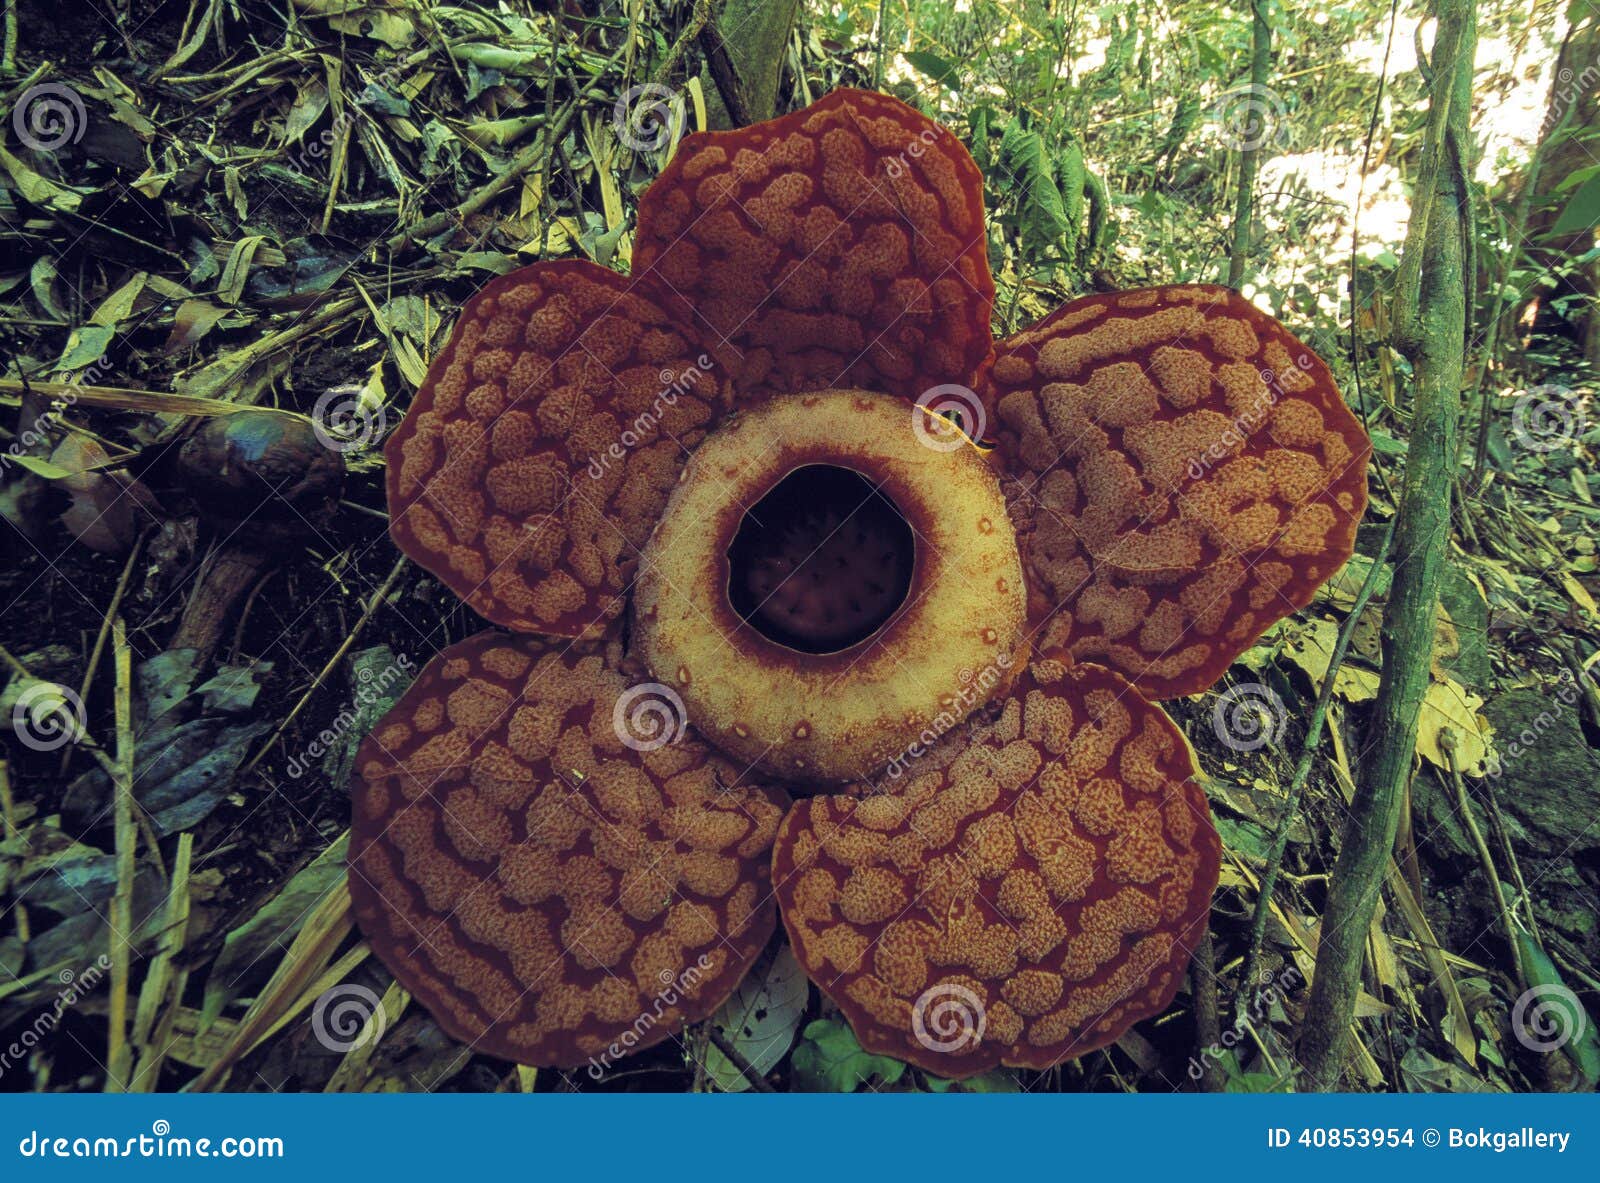 world's largest flower, rafflesia tuanmudae, gunung gading national park, sarawak, malaysia